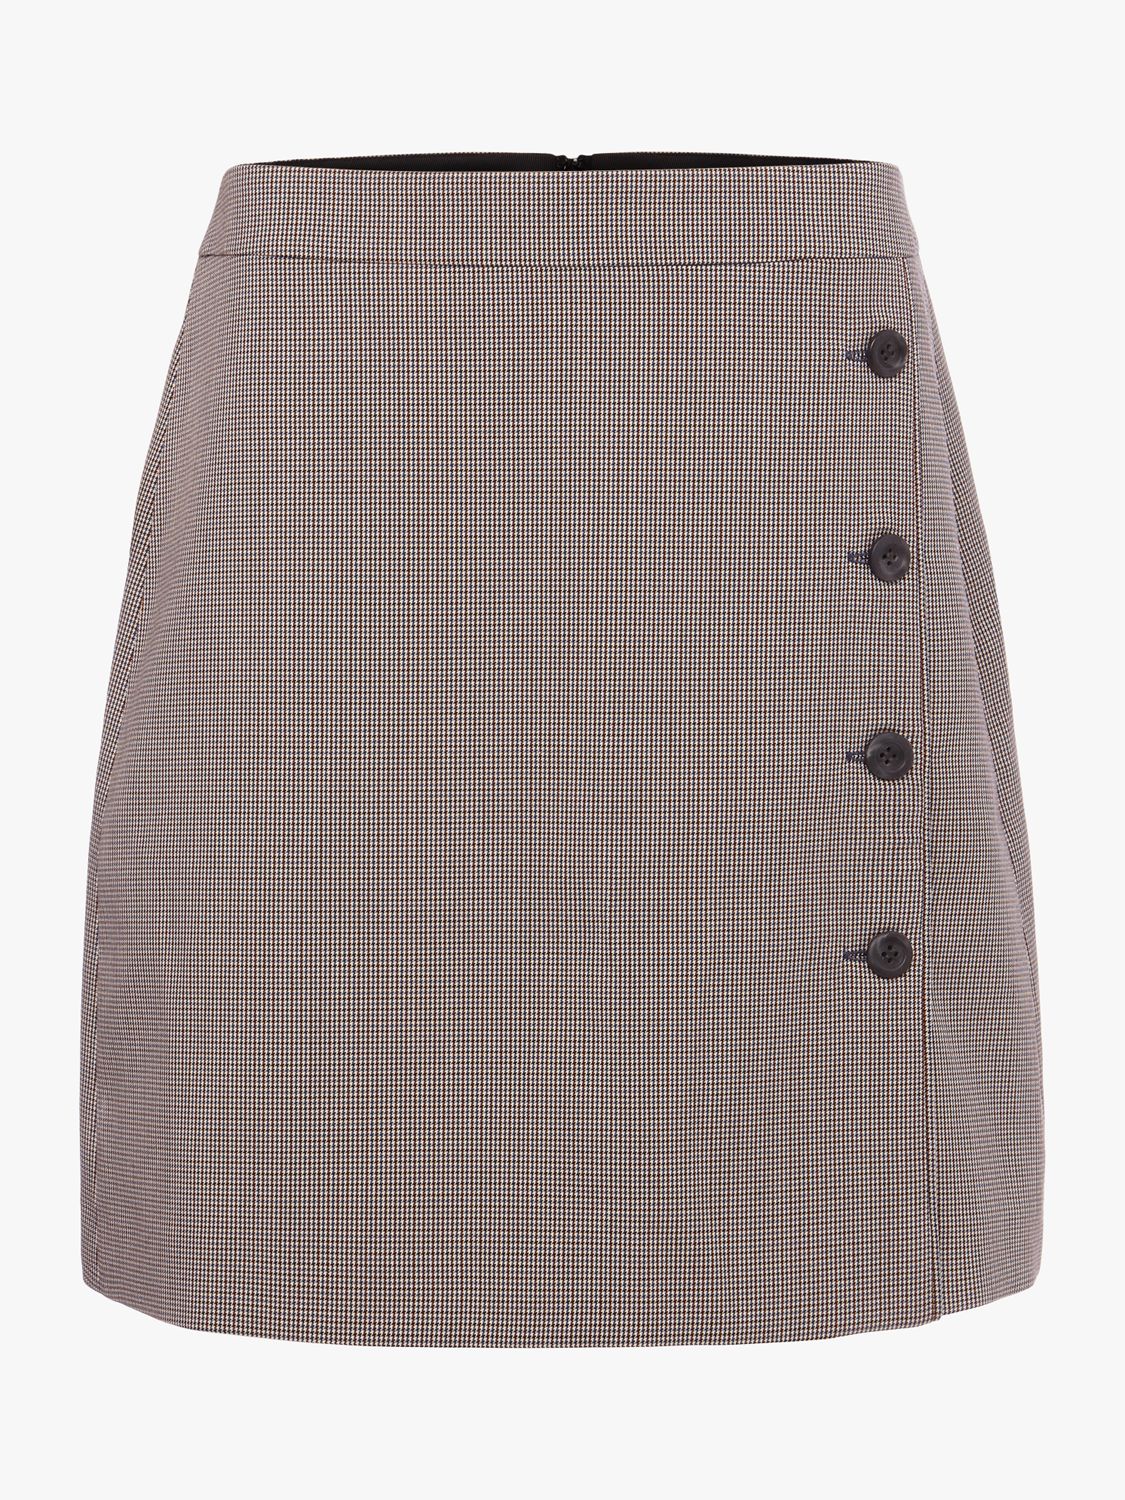 Hobbs Taylor A-Line Micro Check Mini Skirt, Multi